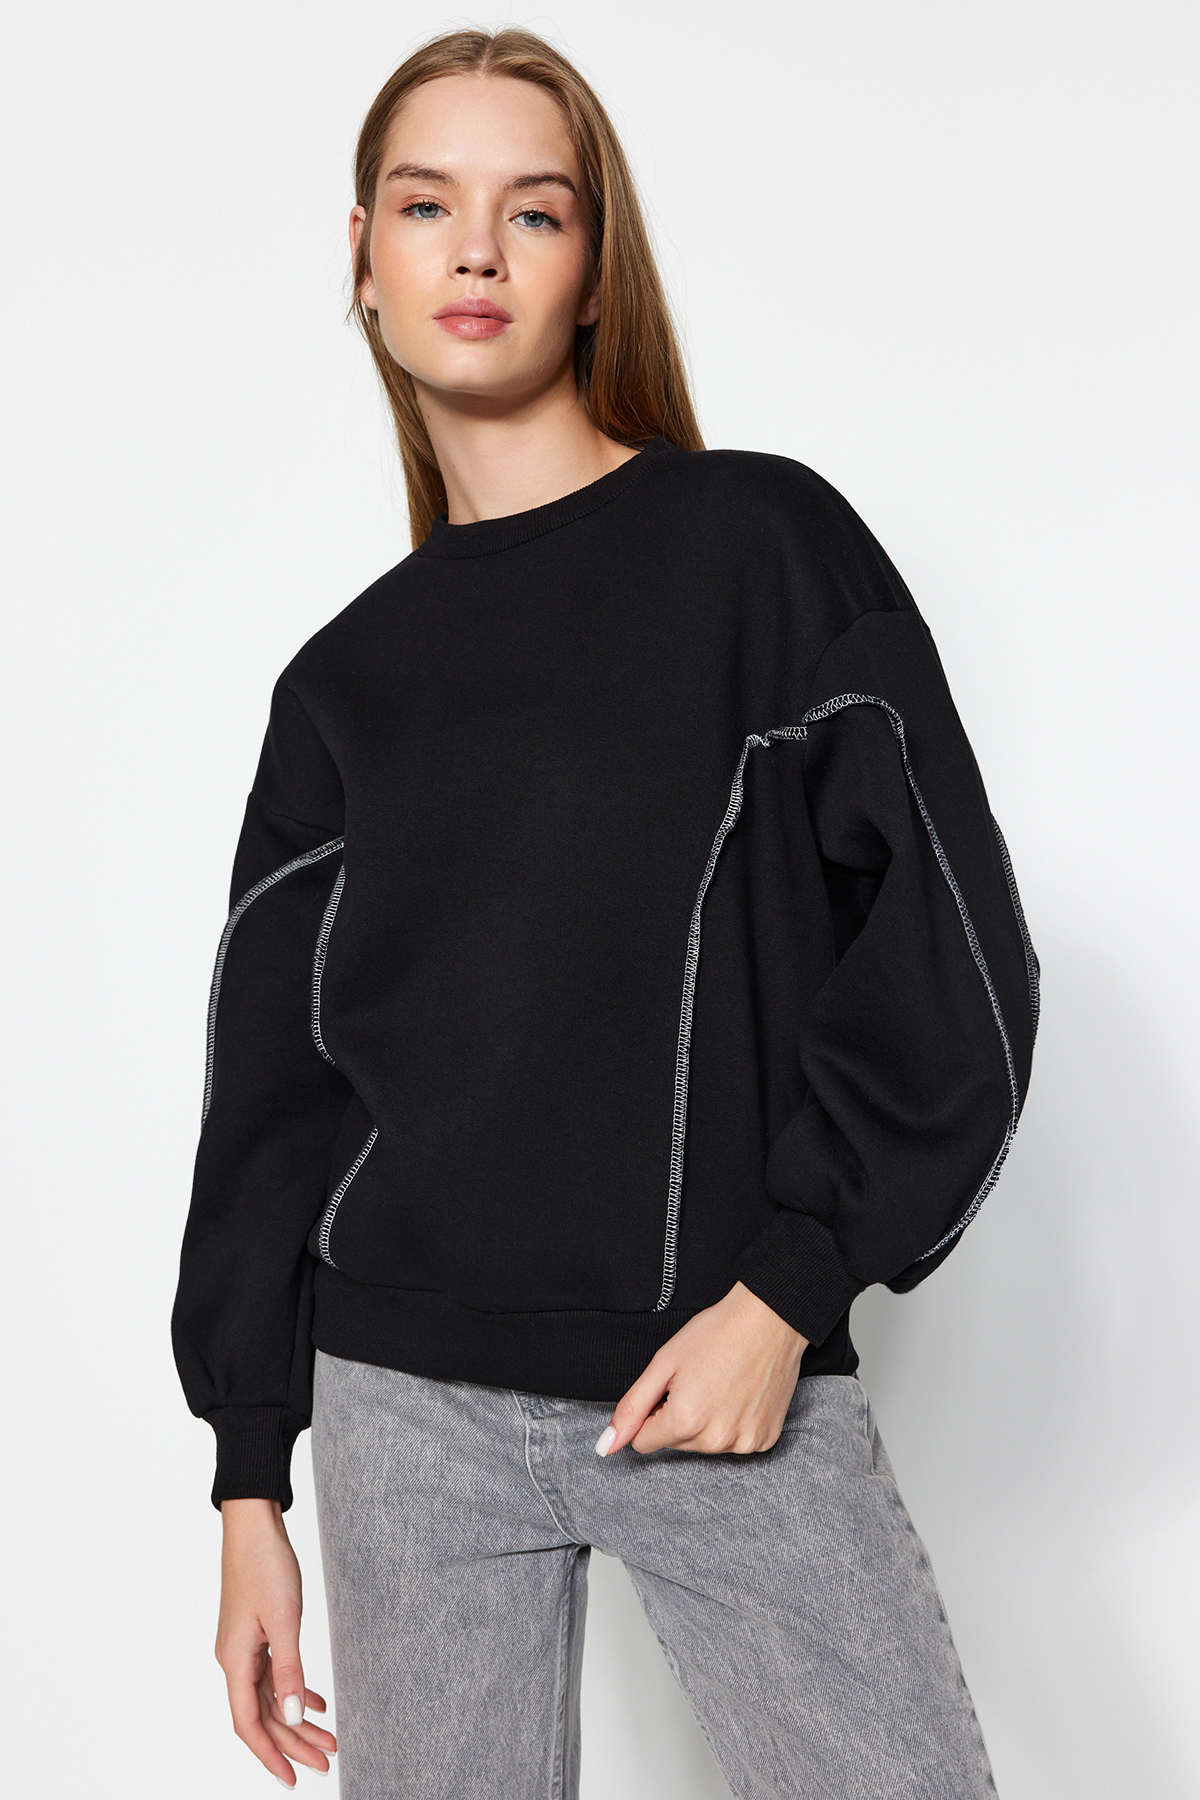 Trendyol Black Stitching Detailed Crew Neck Regular Fit Fleece Inside Knitted Sweatshirt